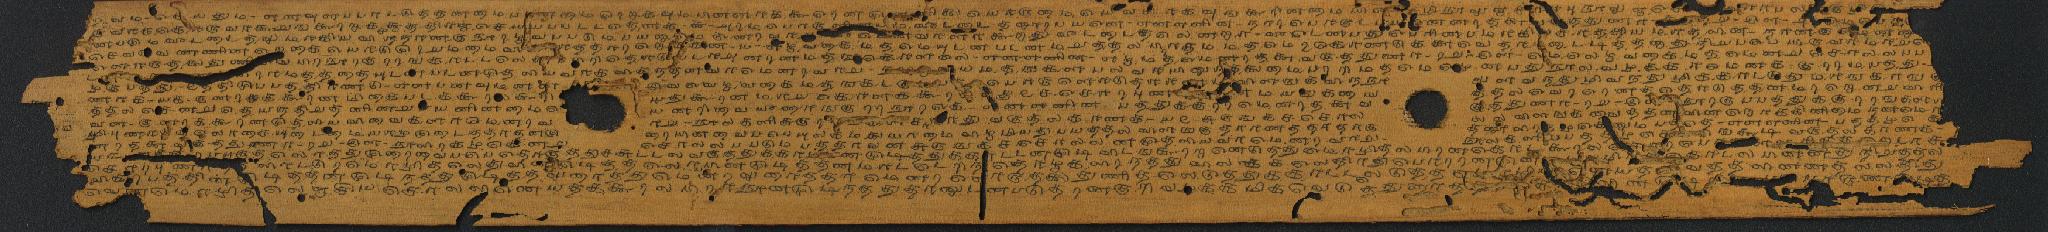 Un manuscrit tamoul endommagé (Copyright EFEO)